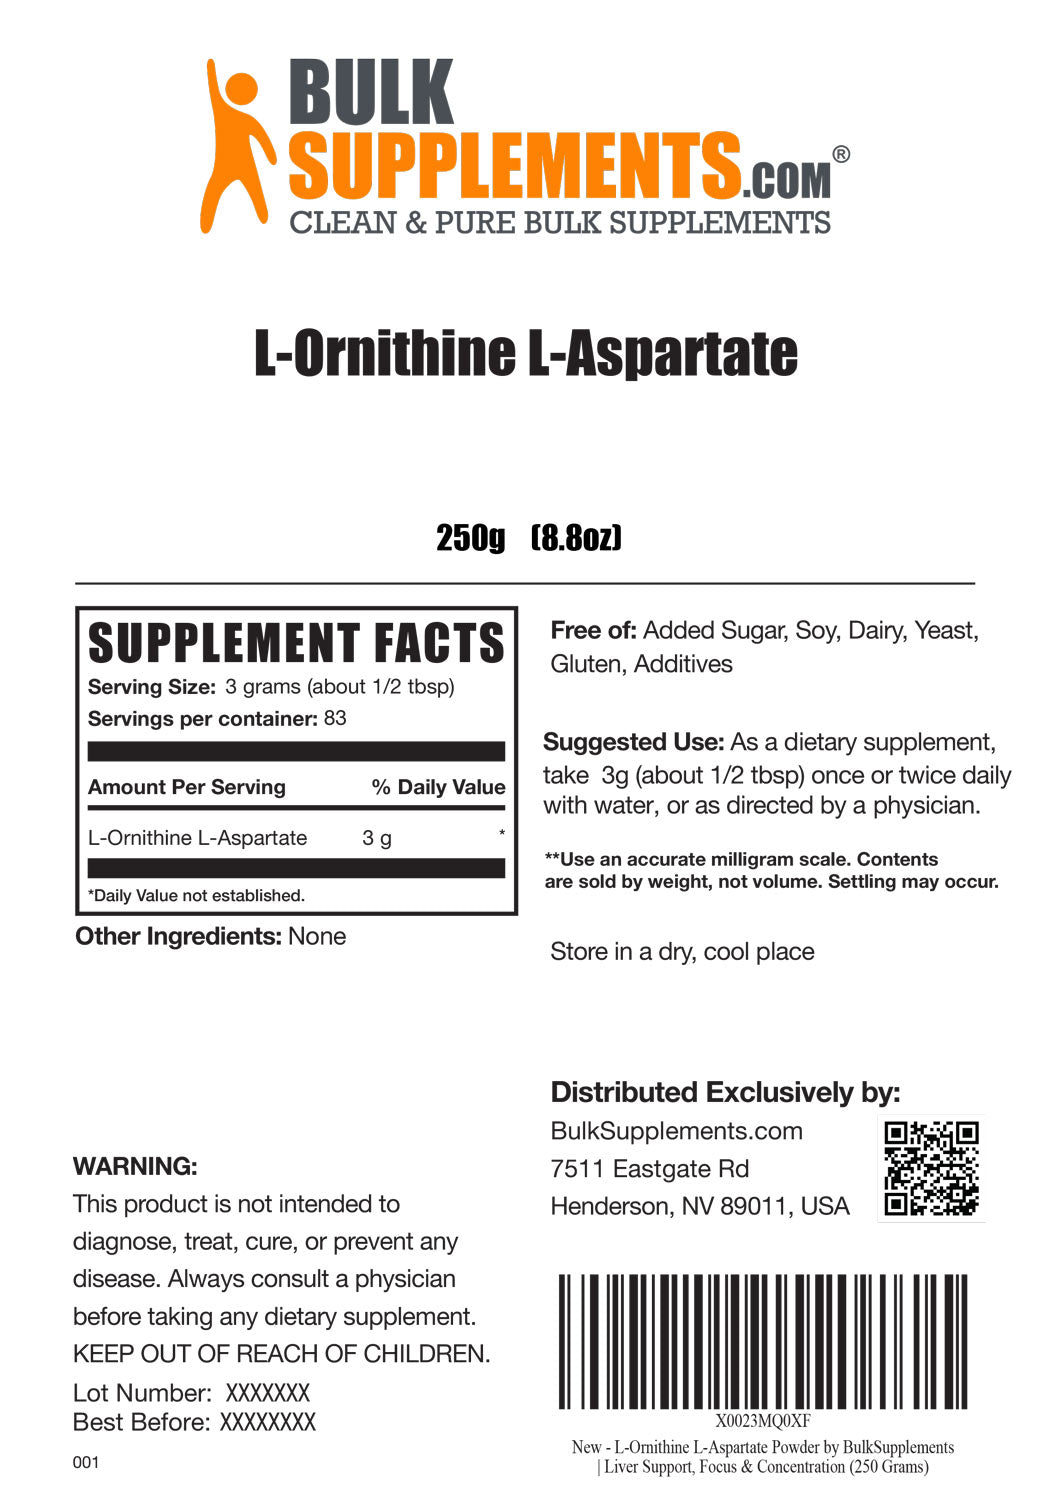 L-Ornithine L-Aspartate powder label 250g